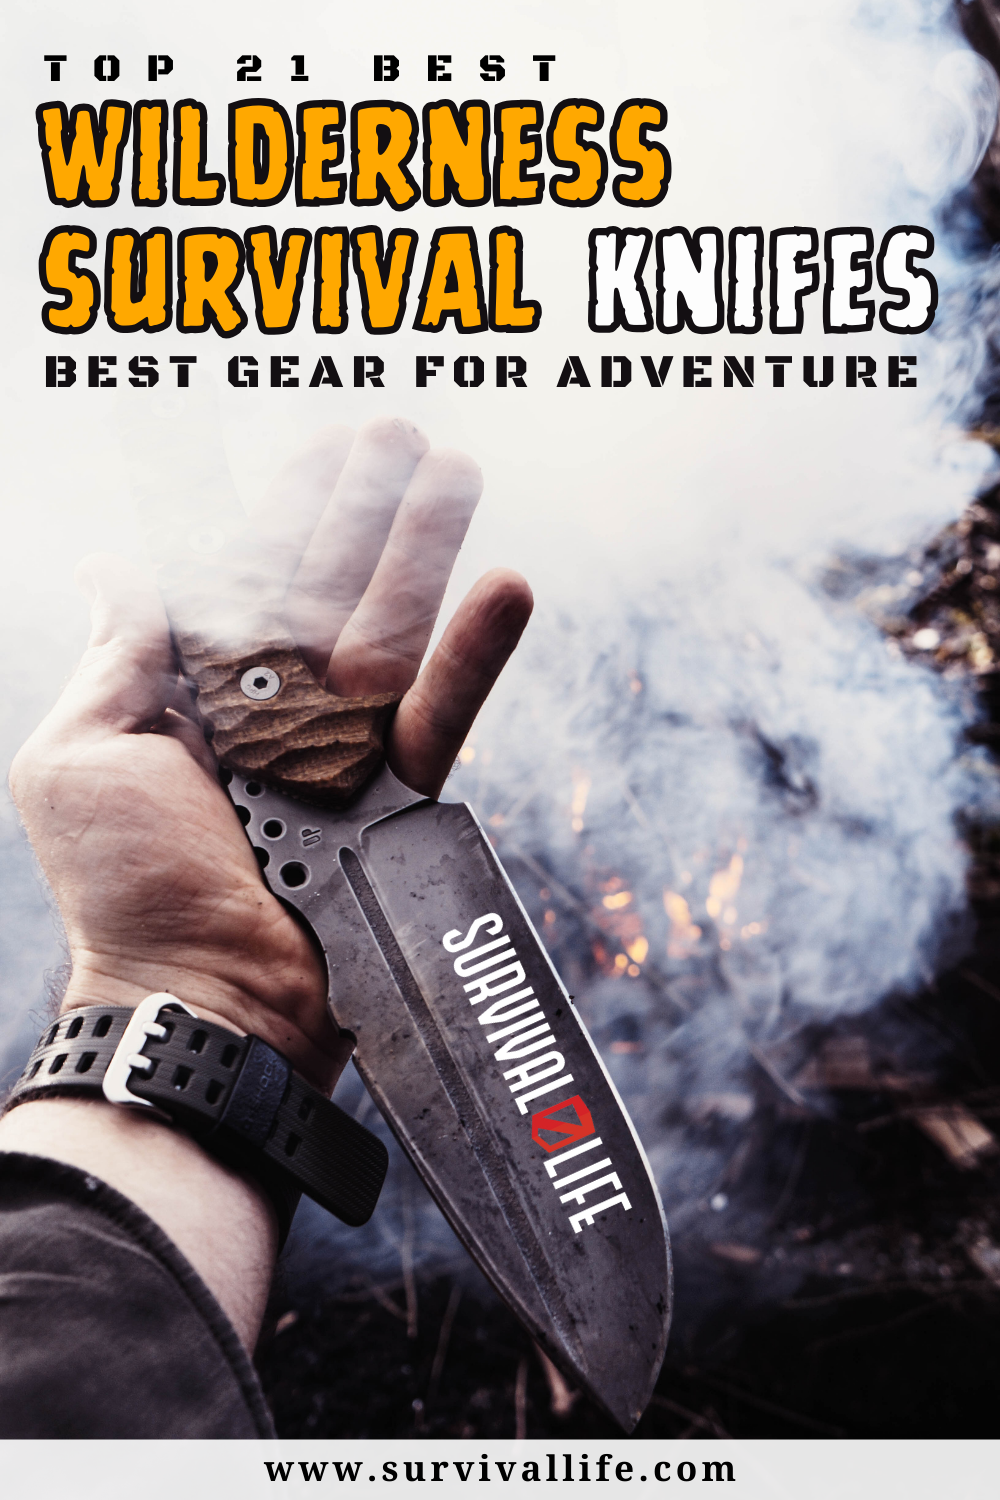 Best wilderness survival knife